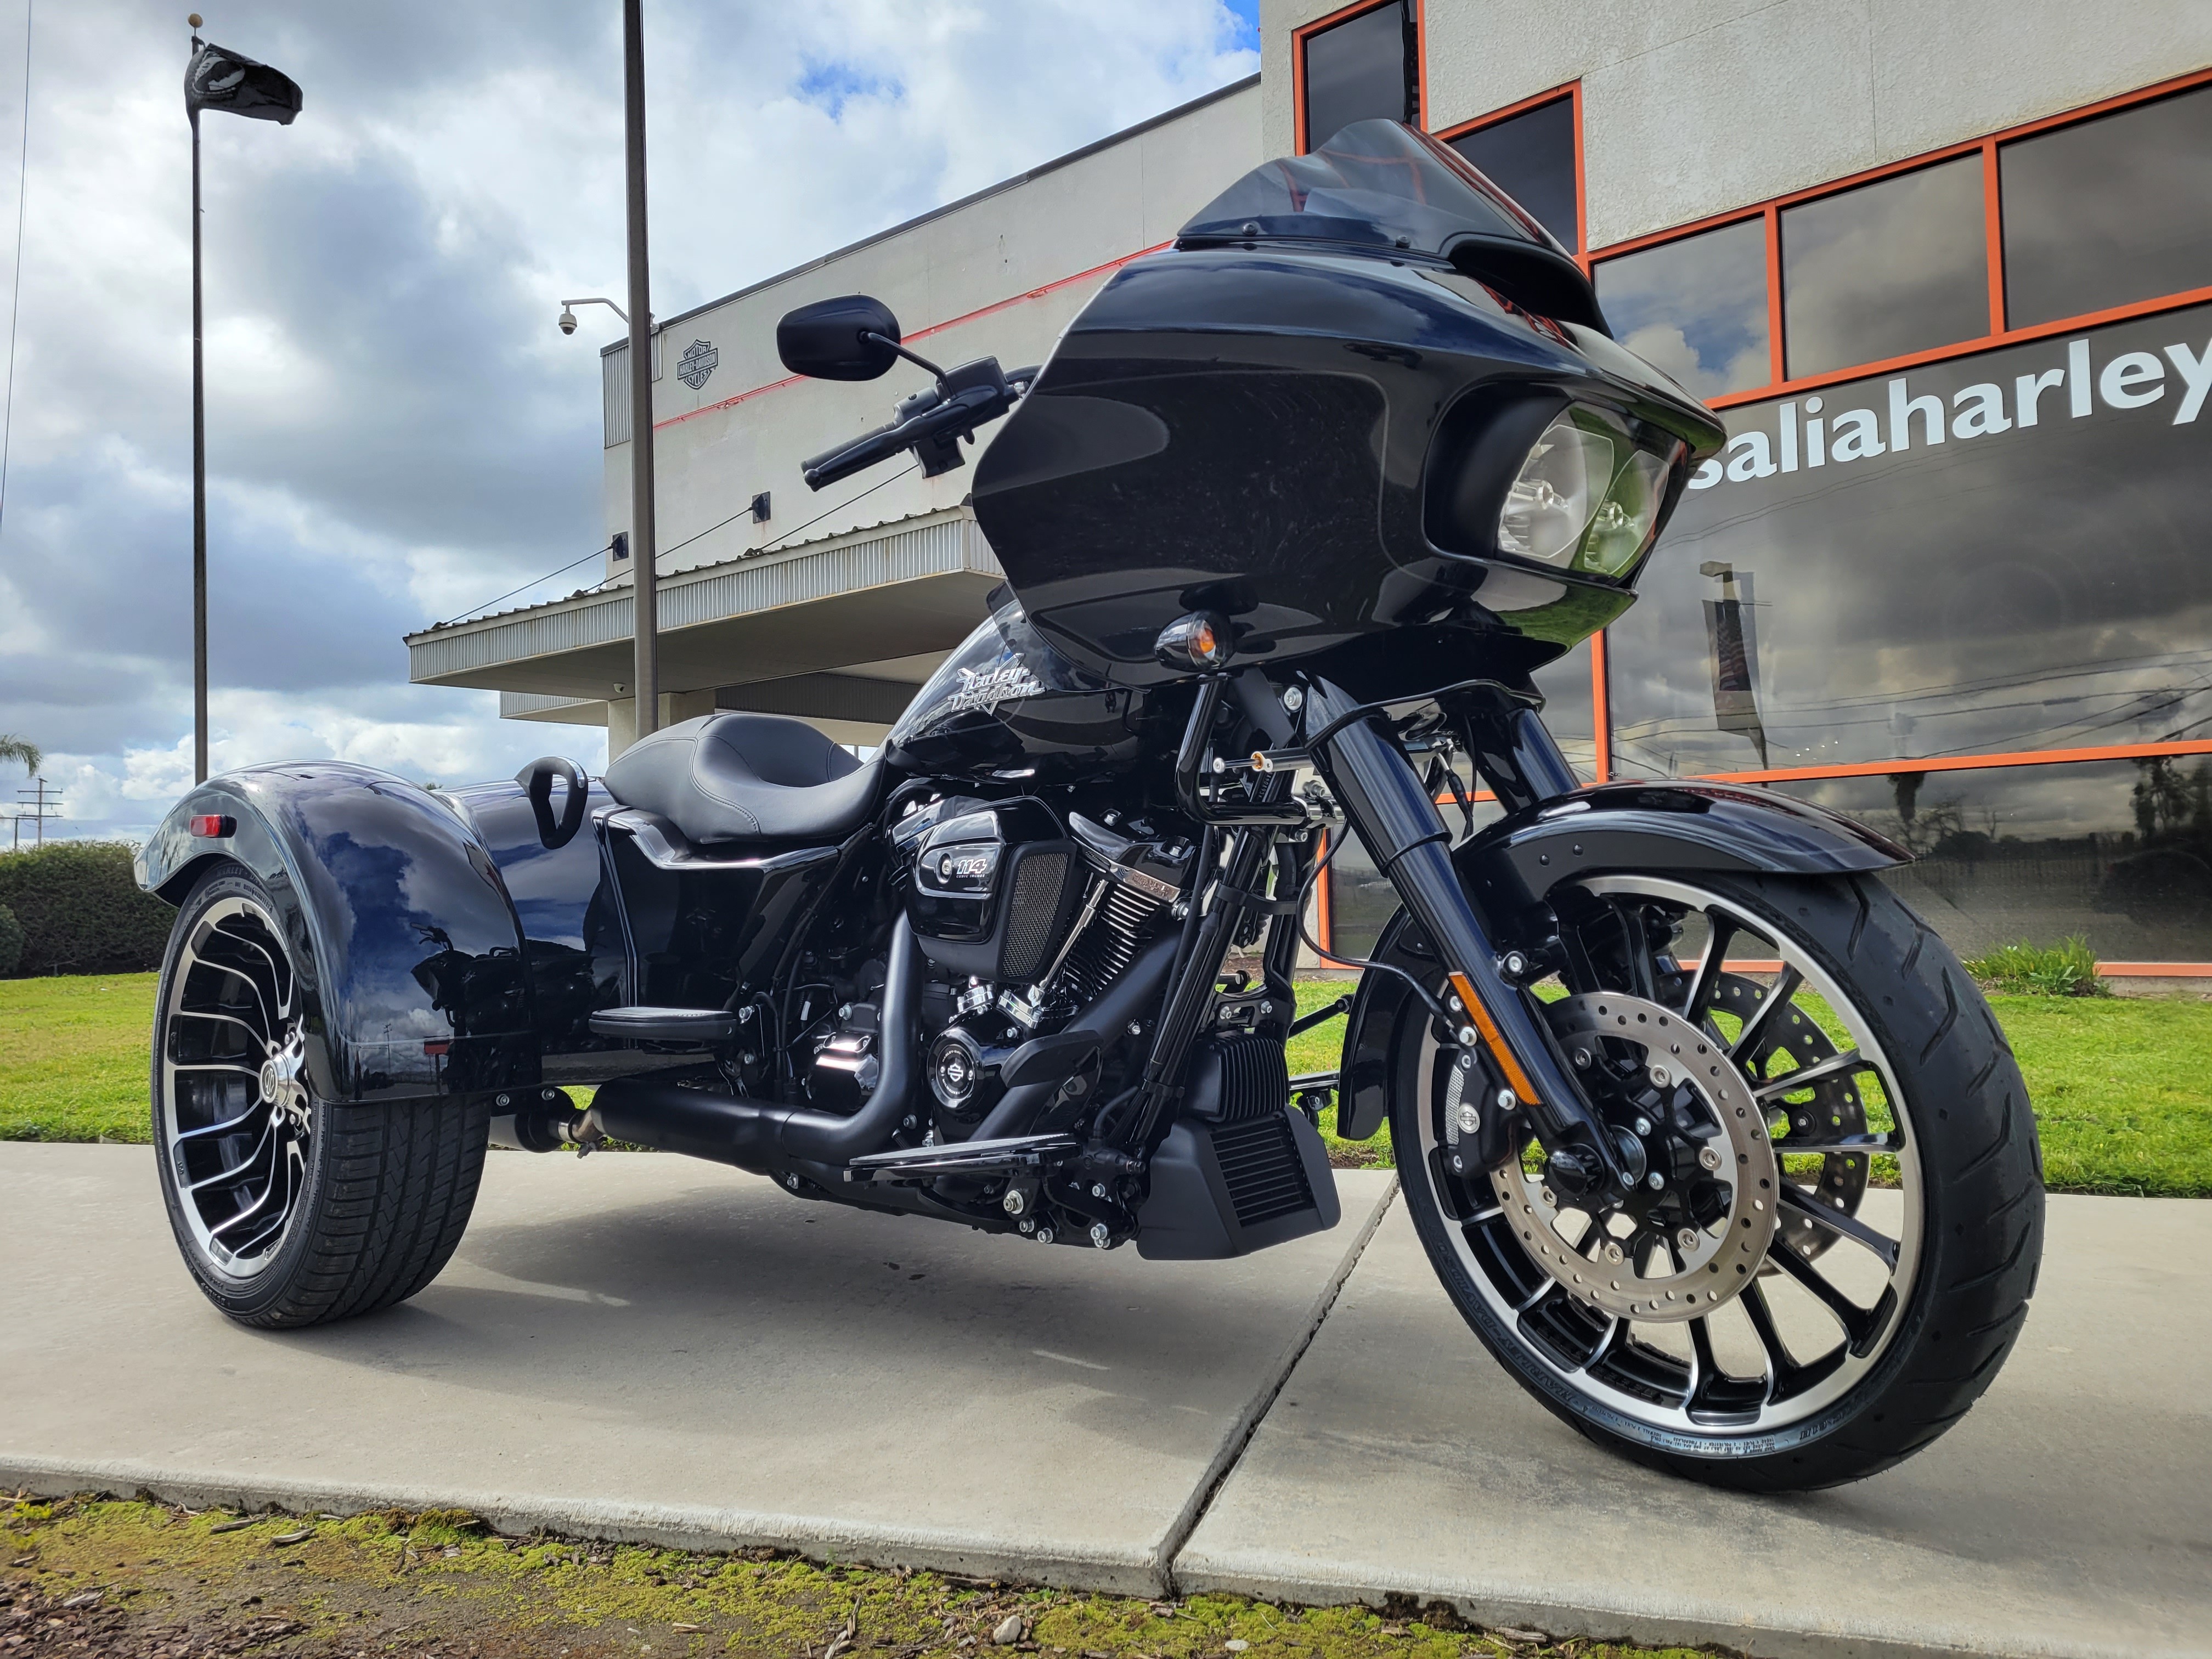 2023 Harley-Davidson Trike Road Glide 3 at Visalia Harley-Davidson